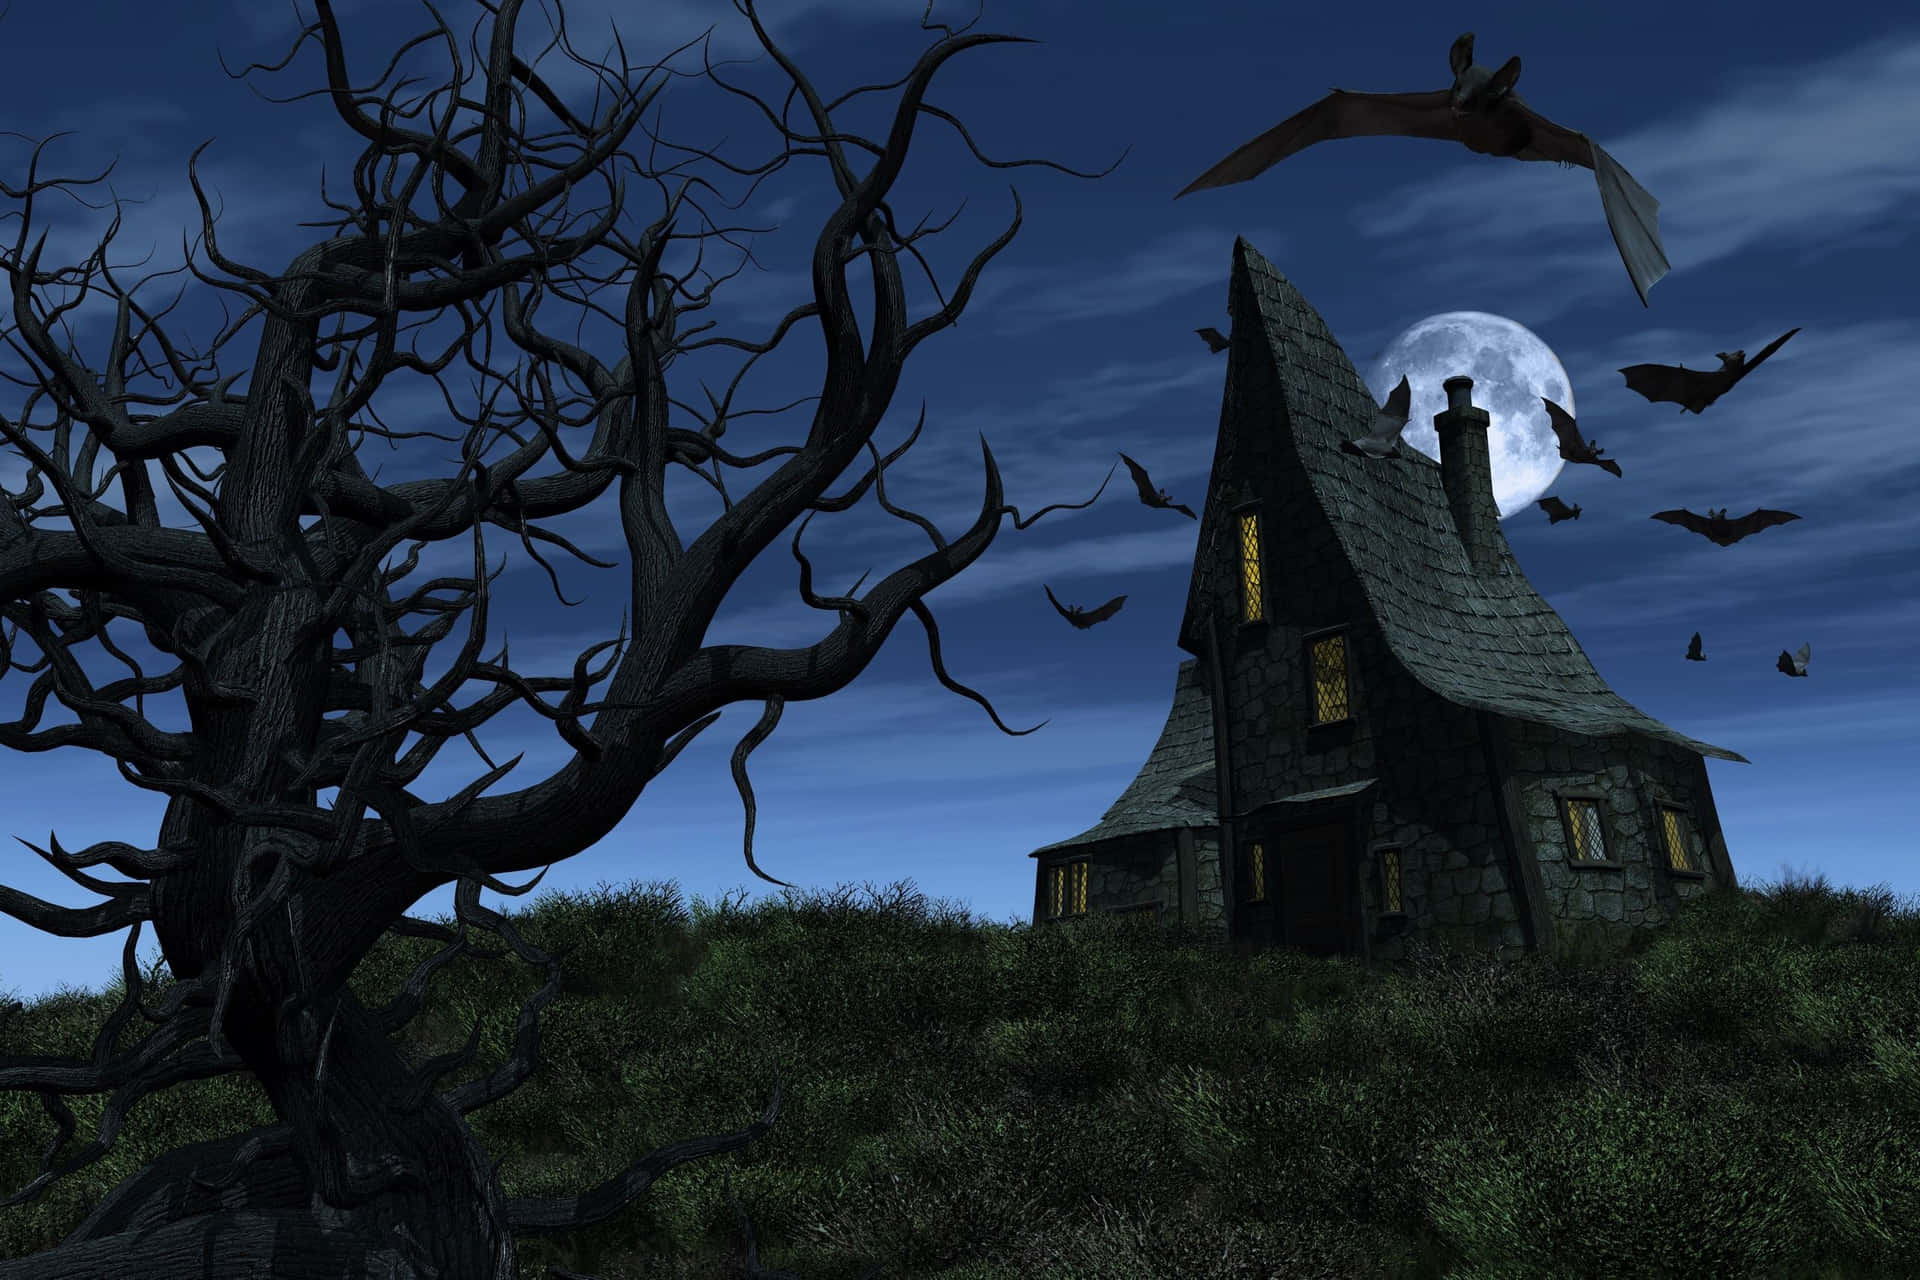 Viviun Halloween Spaventoso Con Una Casa Infestata E Lanterne Di Jack O'lantern.